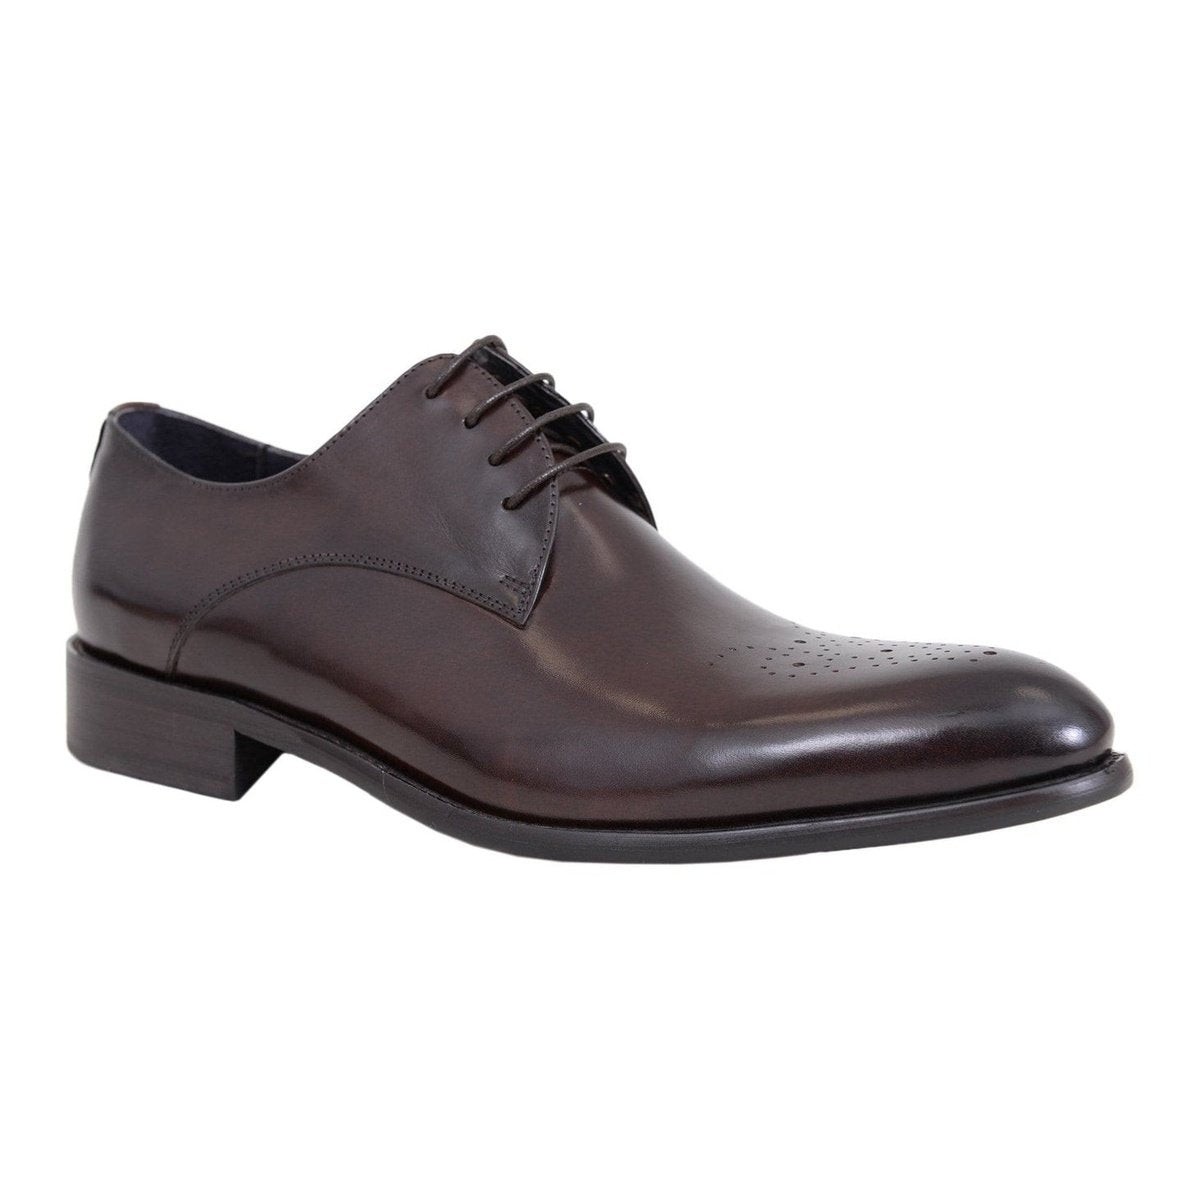 Carrucci Shoes For Amazon 9 D-M Carrucci Men's Genuine Leather Brown Lace Up Oxford Brogues Dress Shoes